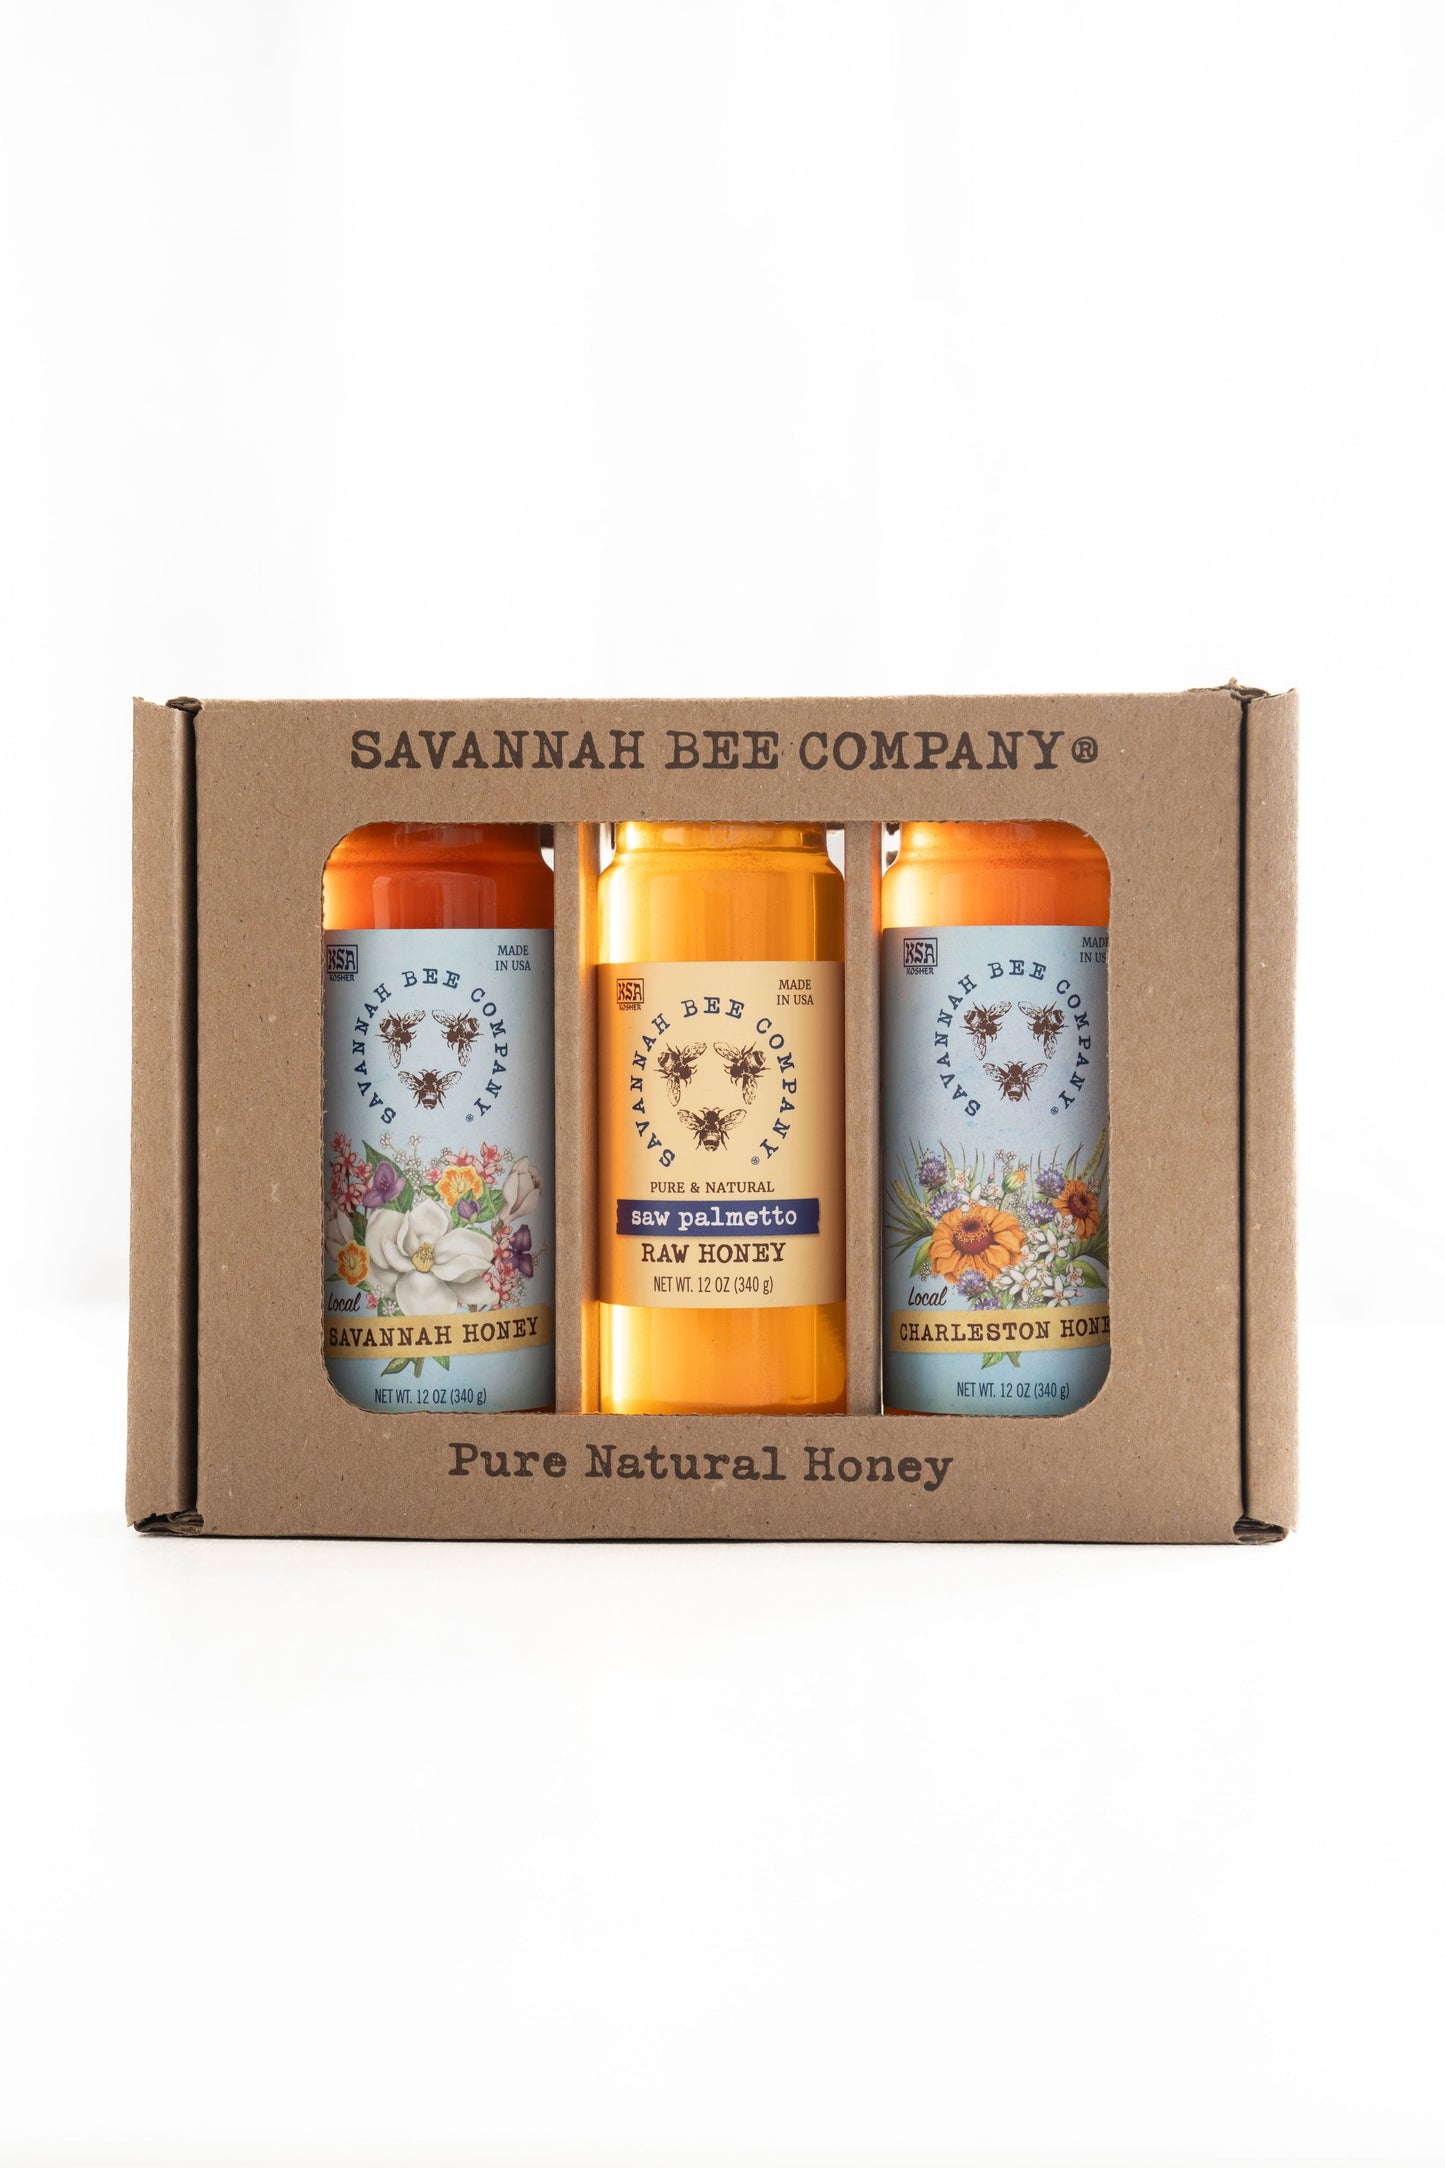 Local Savannah Honey, Pure & Natural Saw Palmetto Raw Honey and Local Charleston Honey 12 oz. towers in a gift box